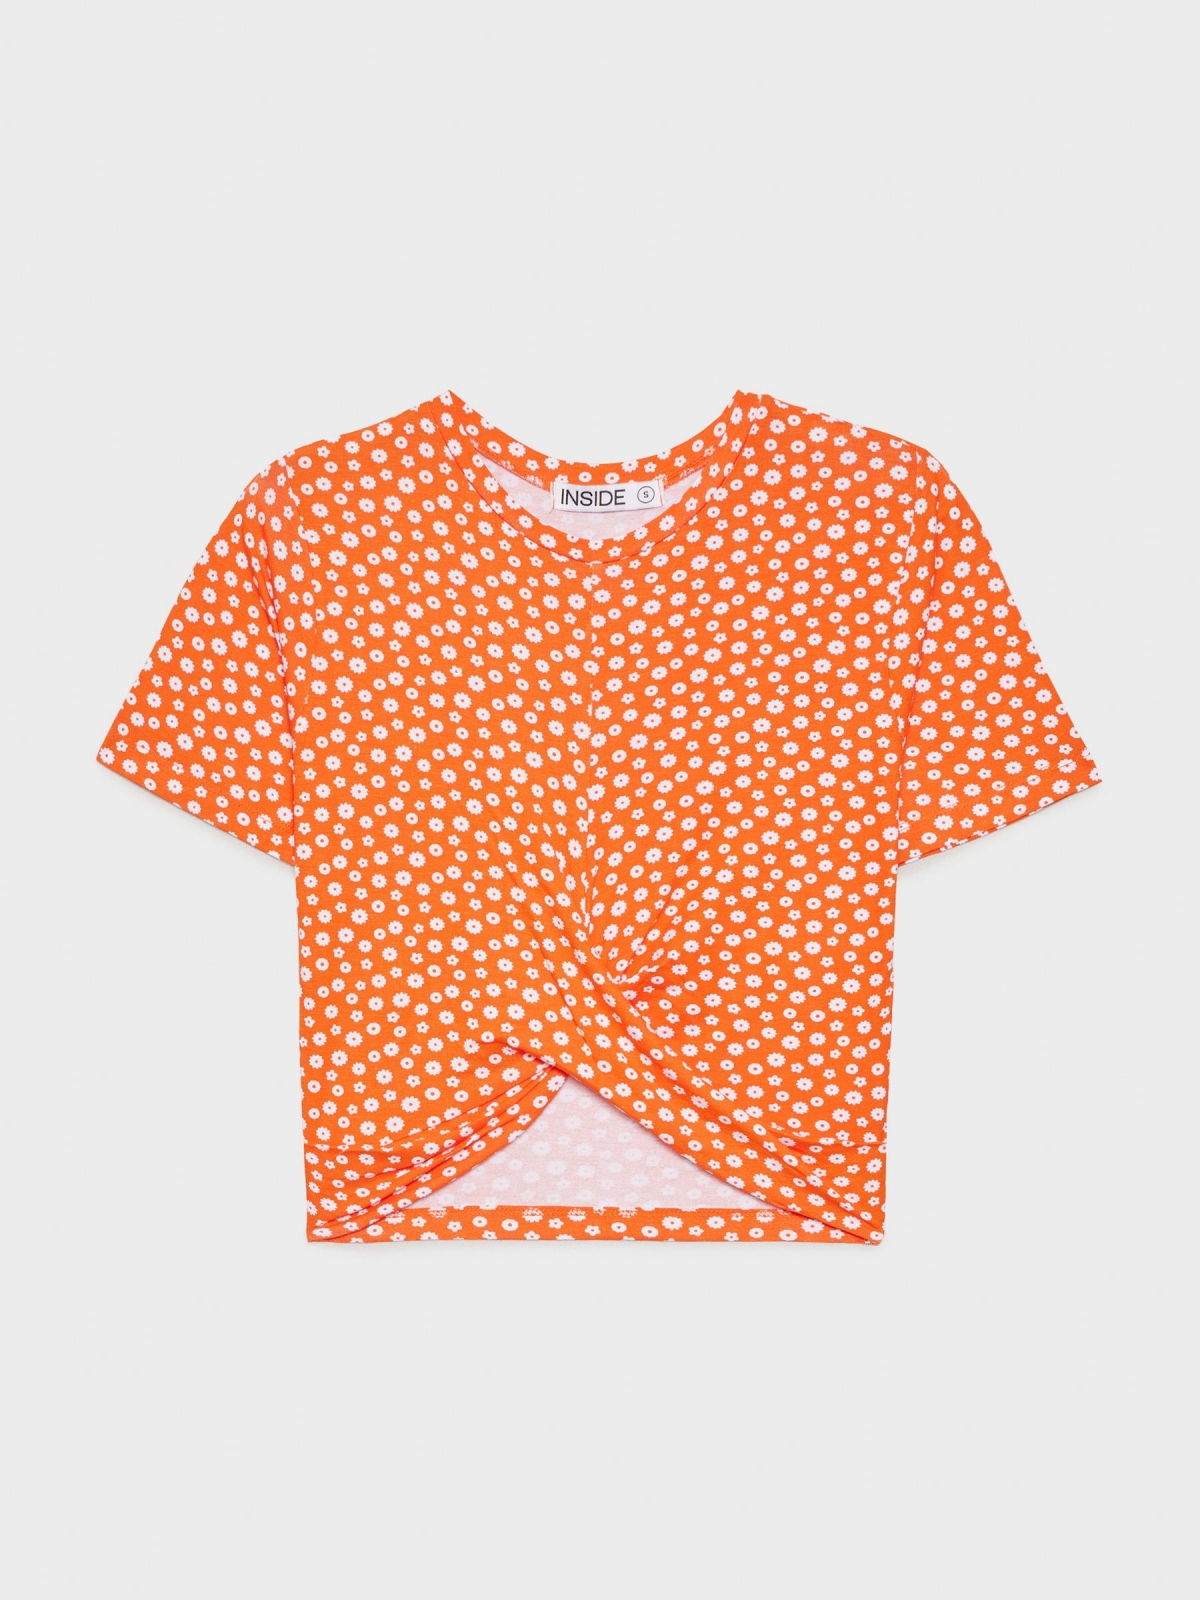  Camiseta de lunares con nudo naranja